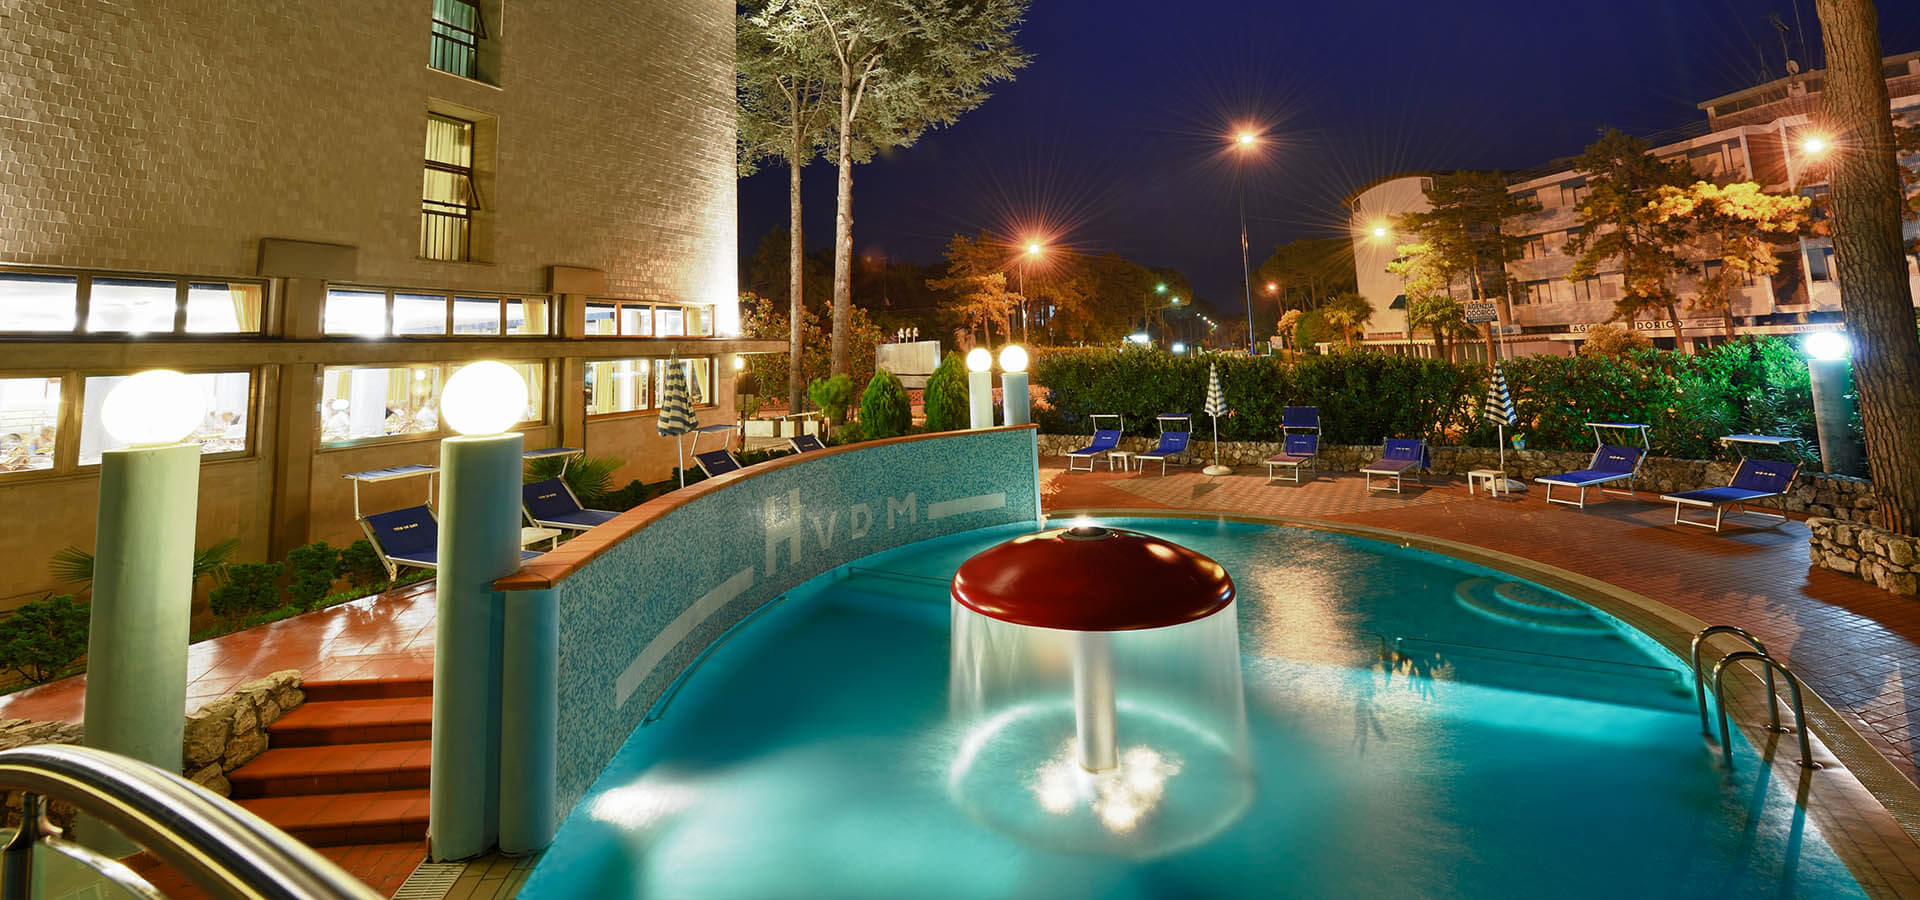 hotel con piscina notturna